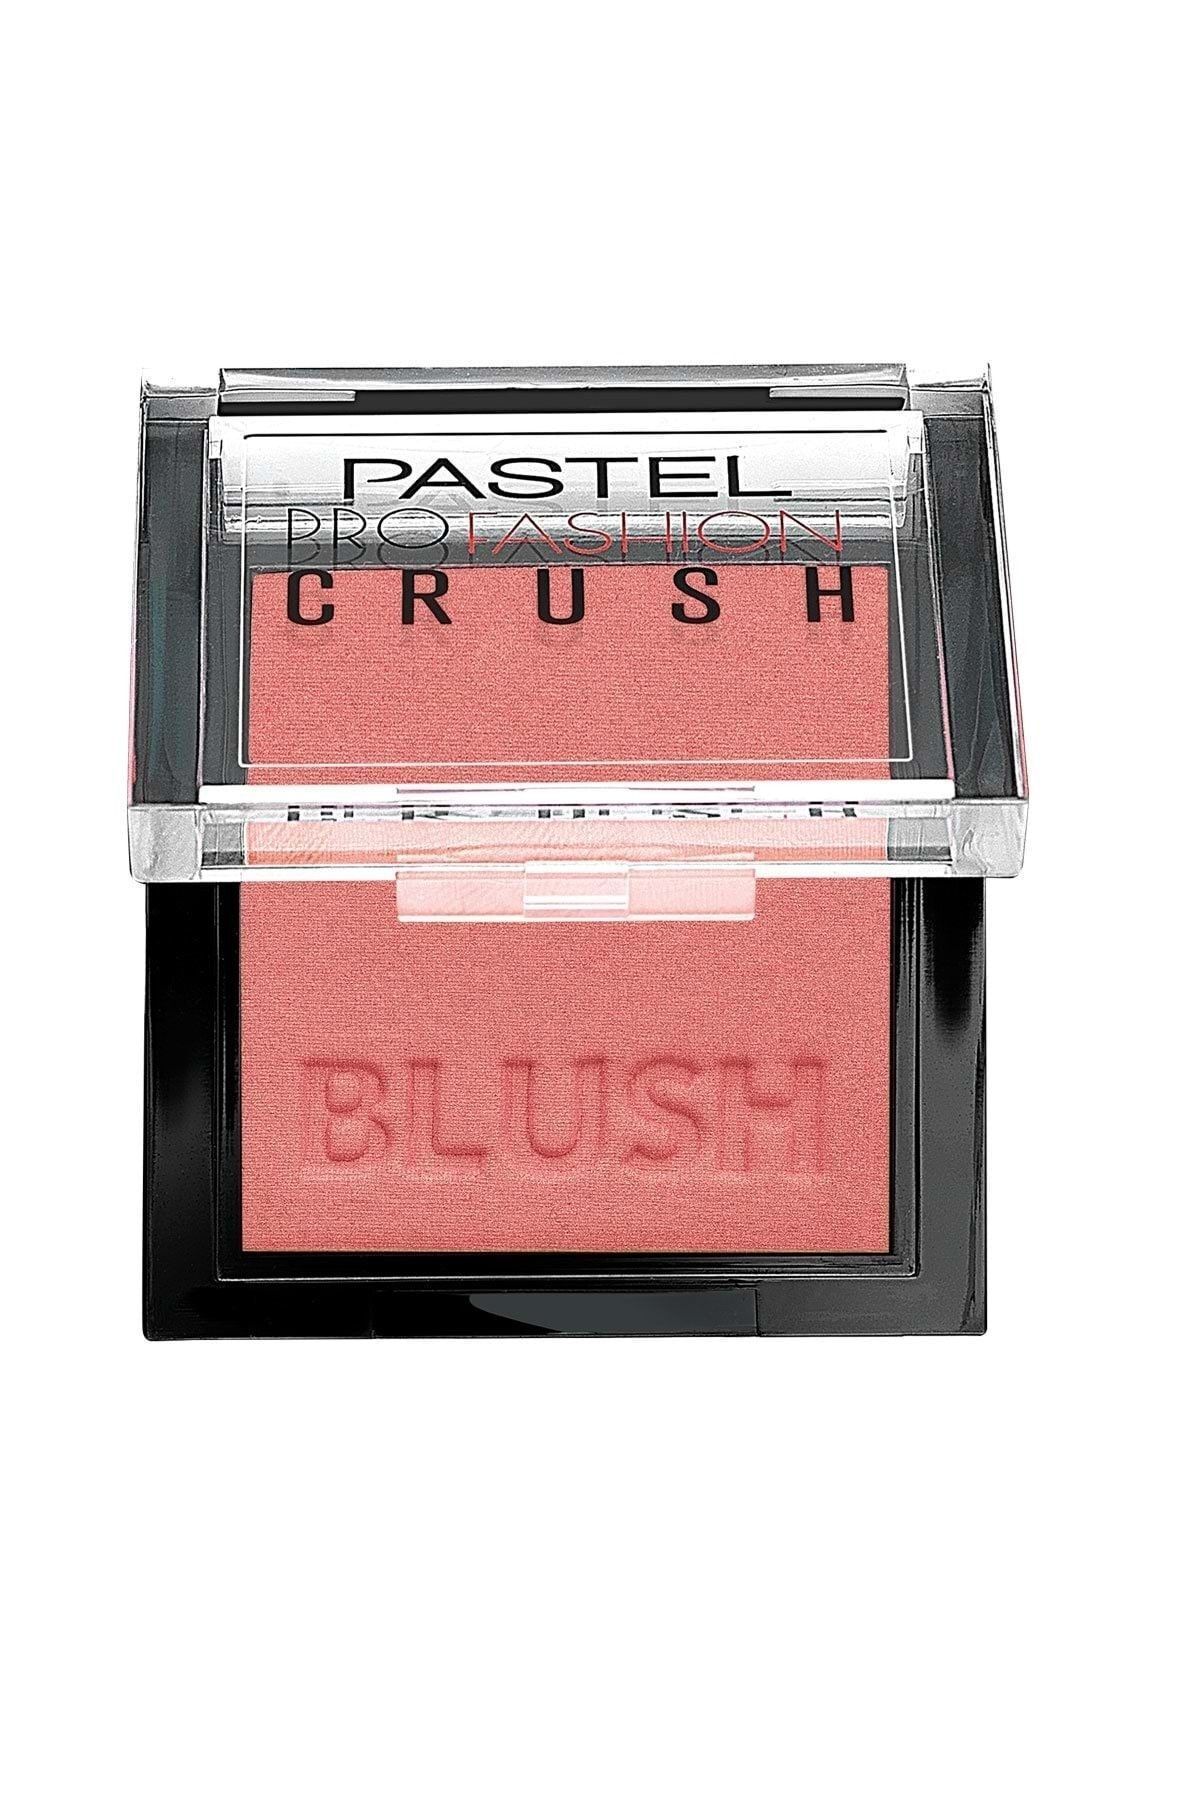 Pastel Profashion Crush Blush 8 Gr - - 0002 - 301 - Std